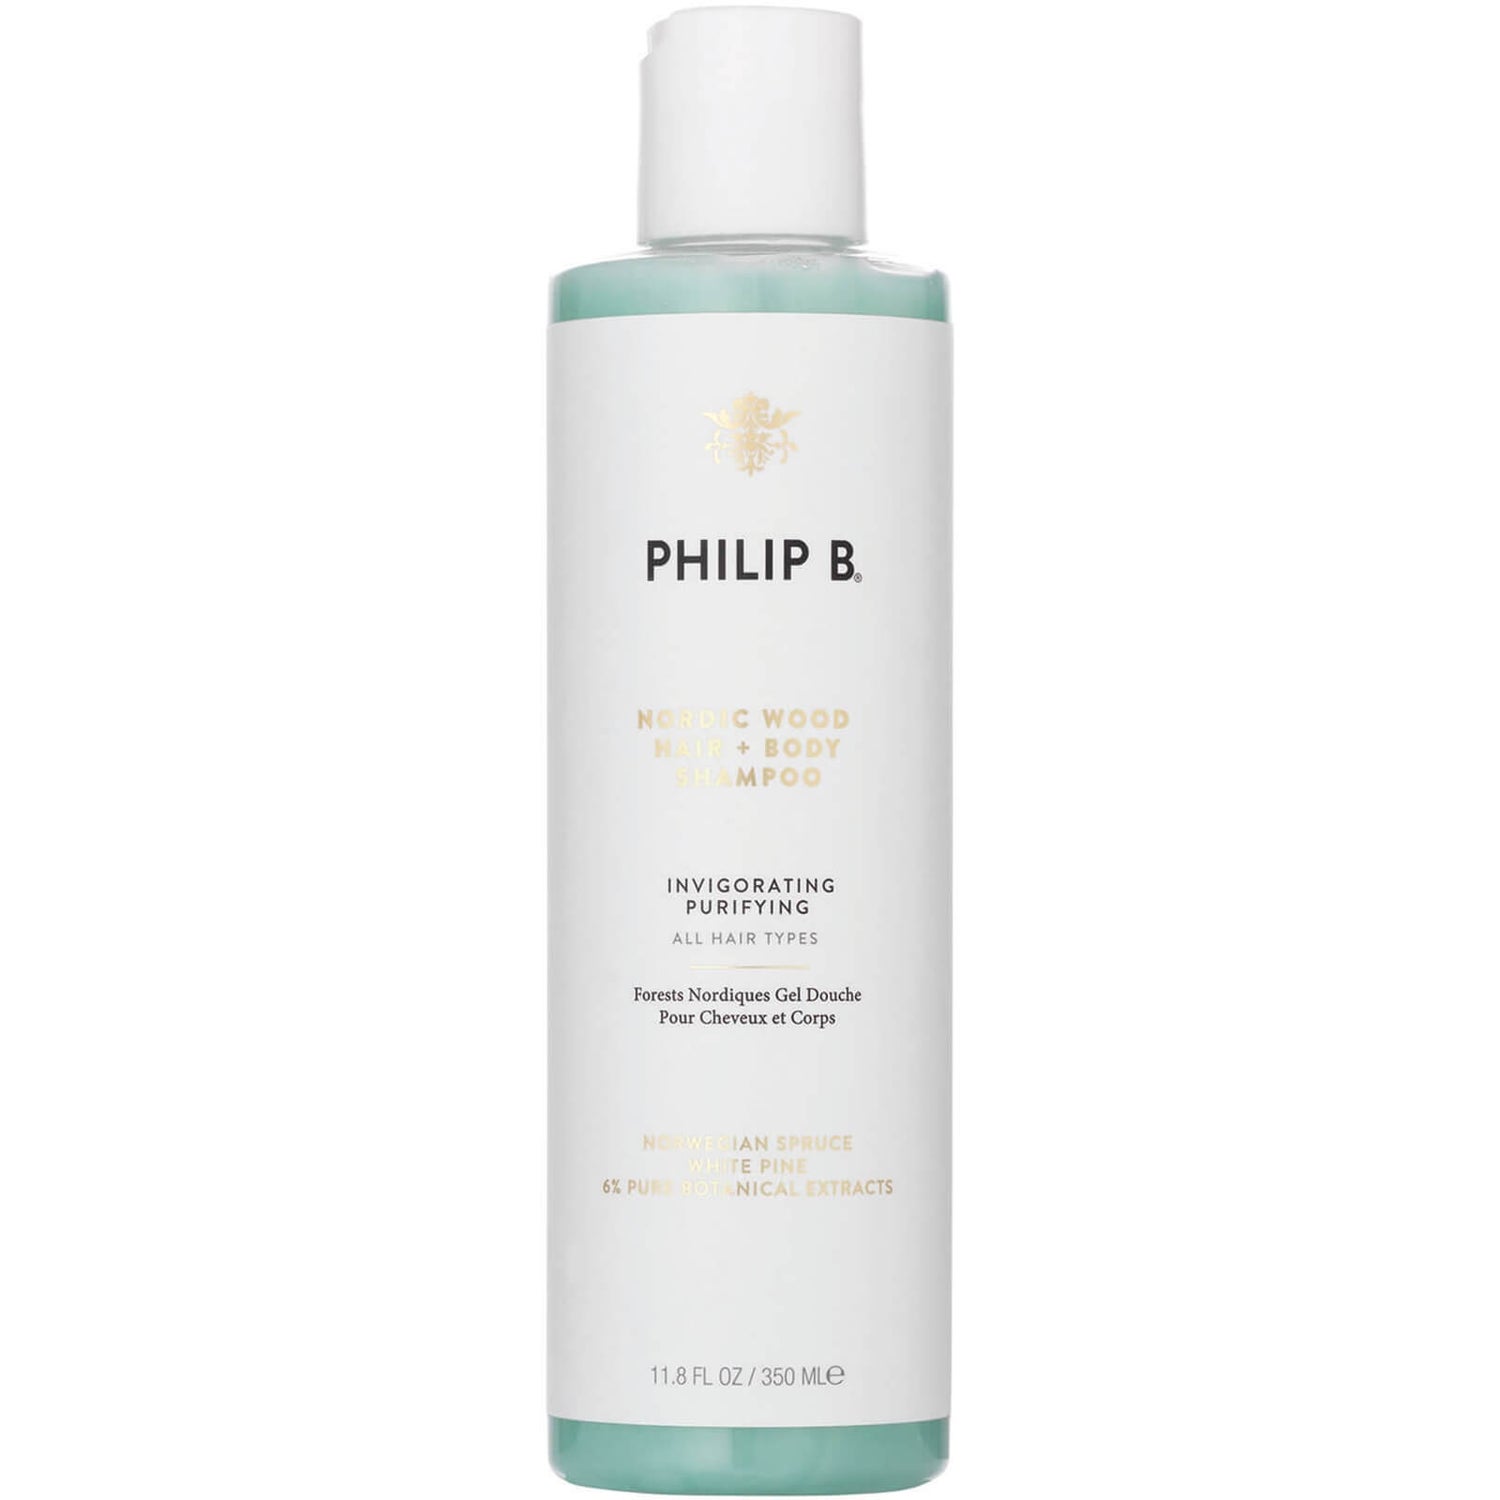 Philip B Nordic Wood Hair and Body Shampoo (350 ml)